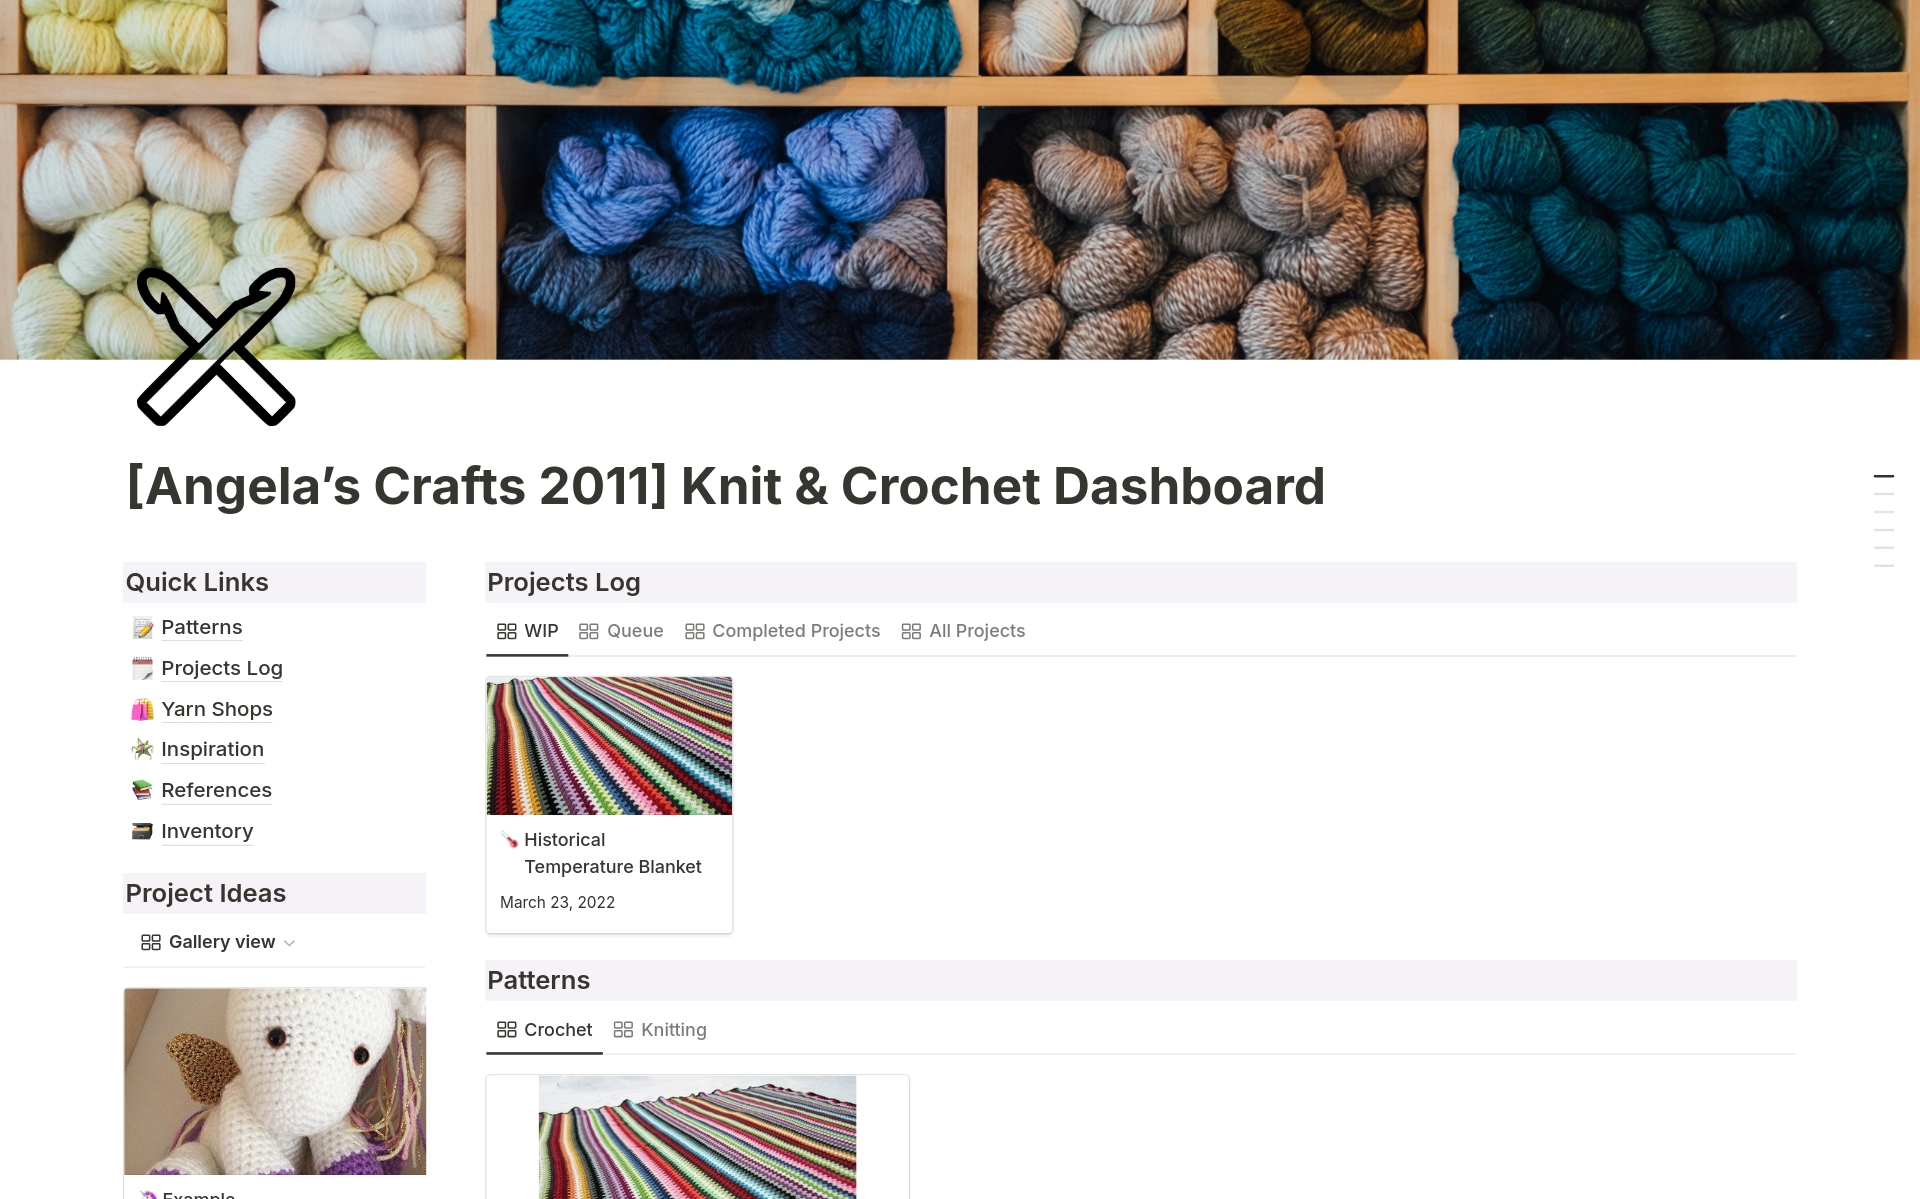 Vista previa de una plantilla para Knit & Crochet Dashboard